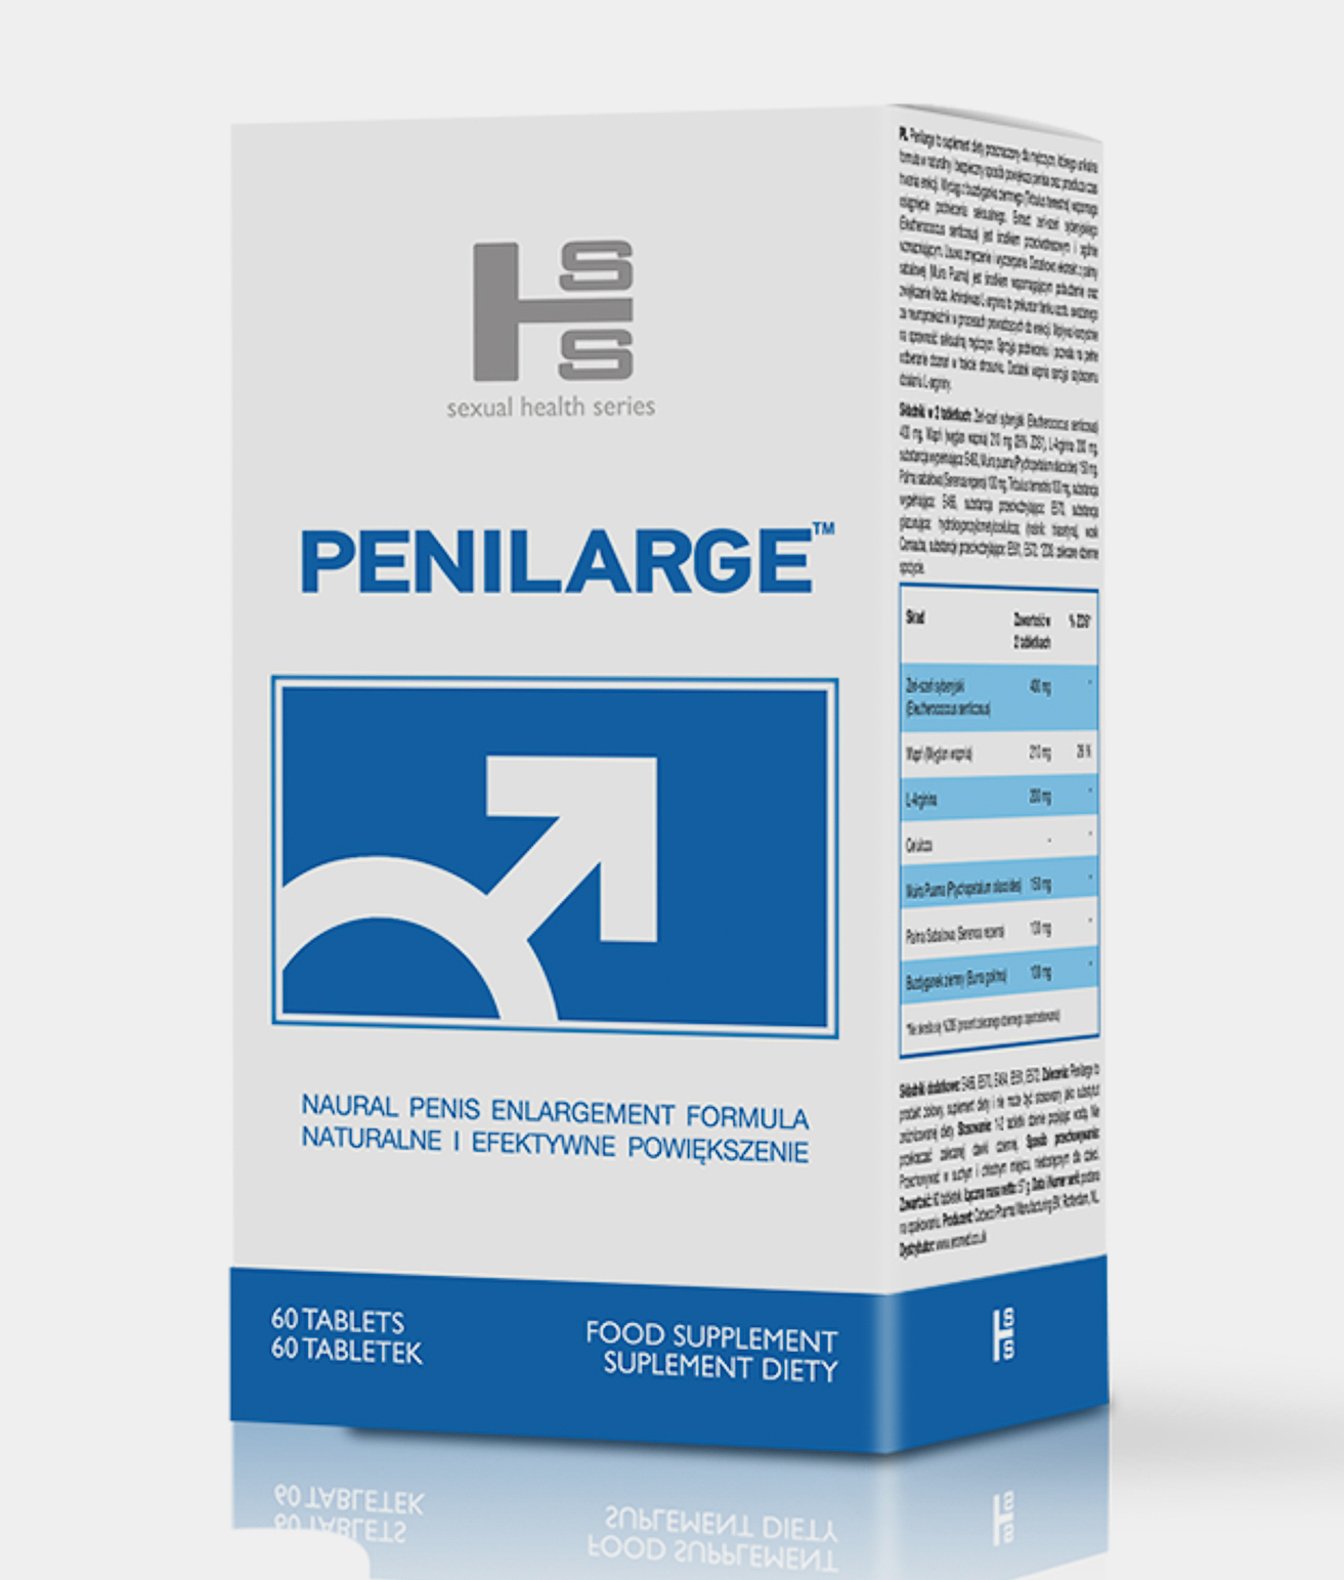 SHS Penilarge tabletki powiększające penisa